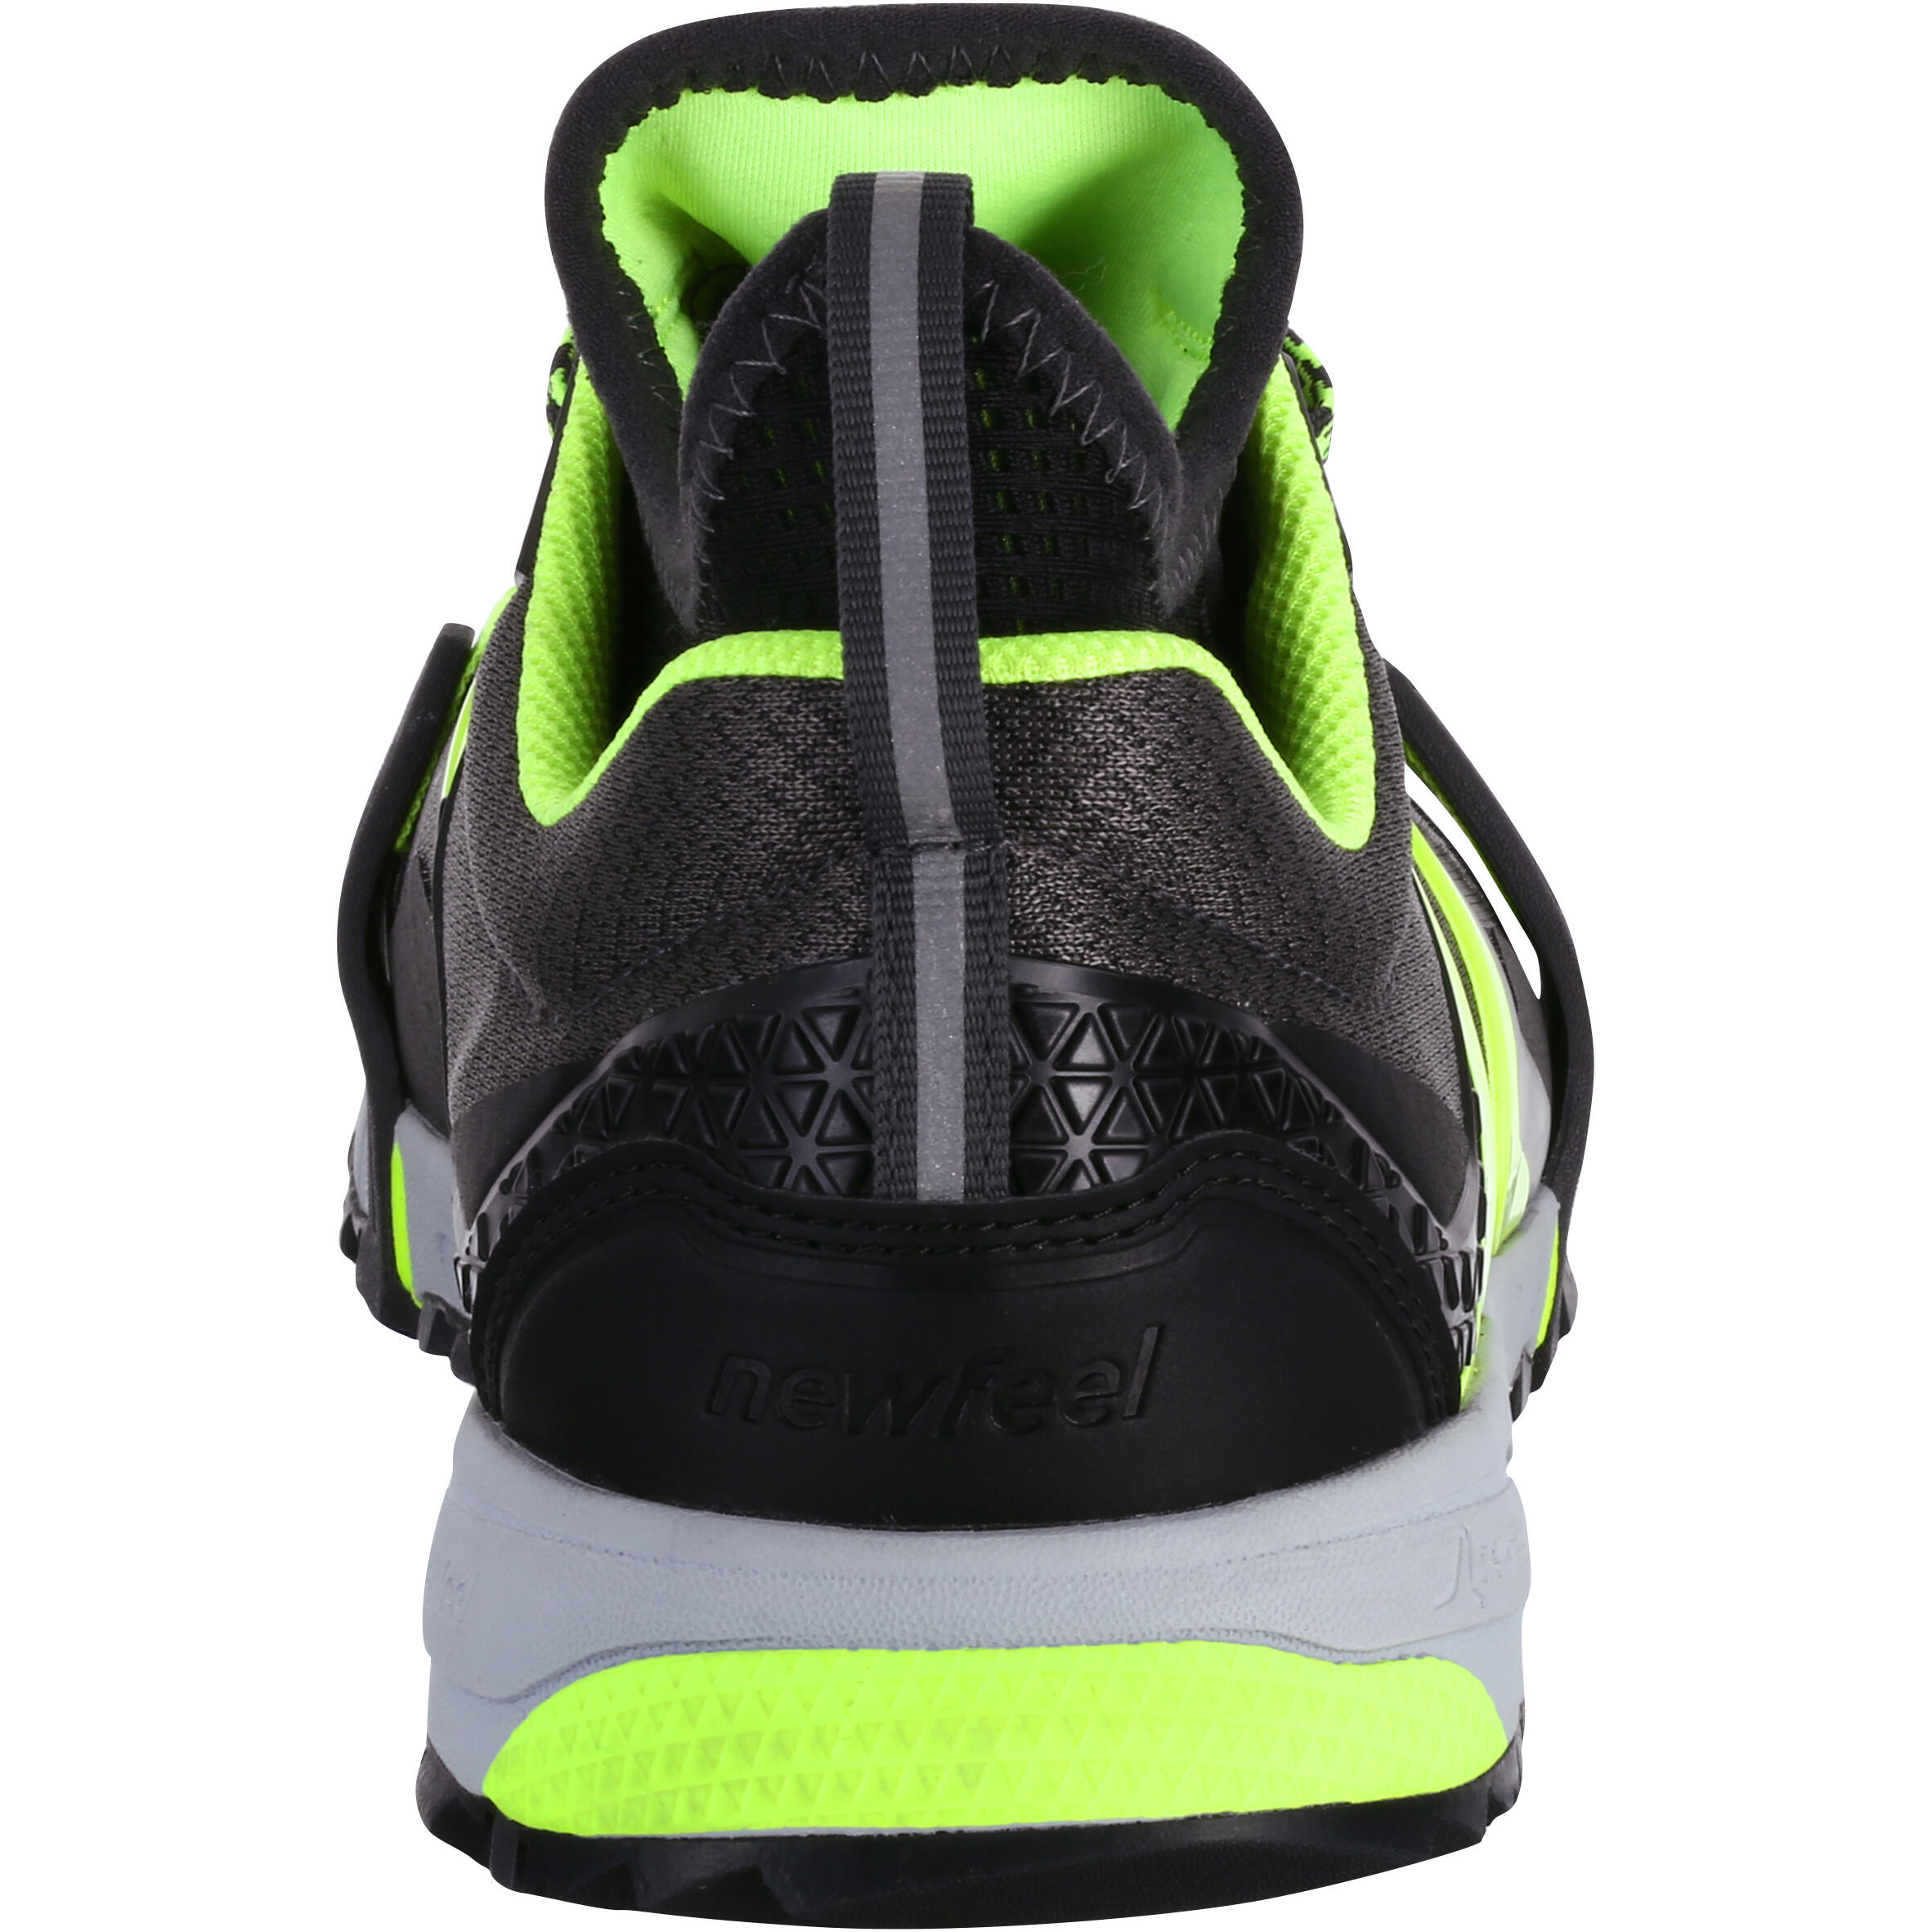 Men's Nordic Walking Shoes NW 900 Flex-H - Black/Green 7/8